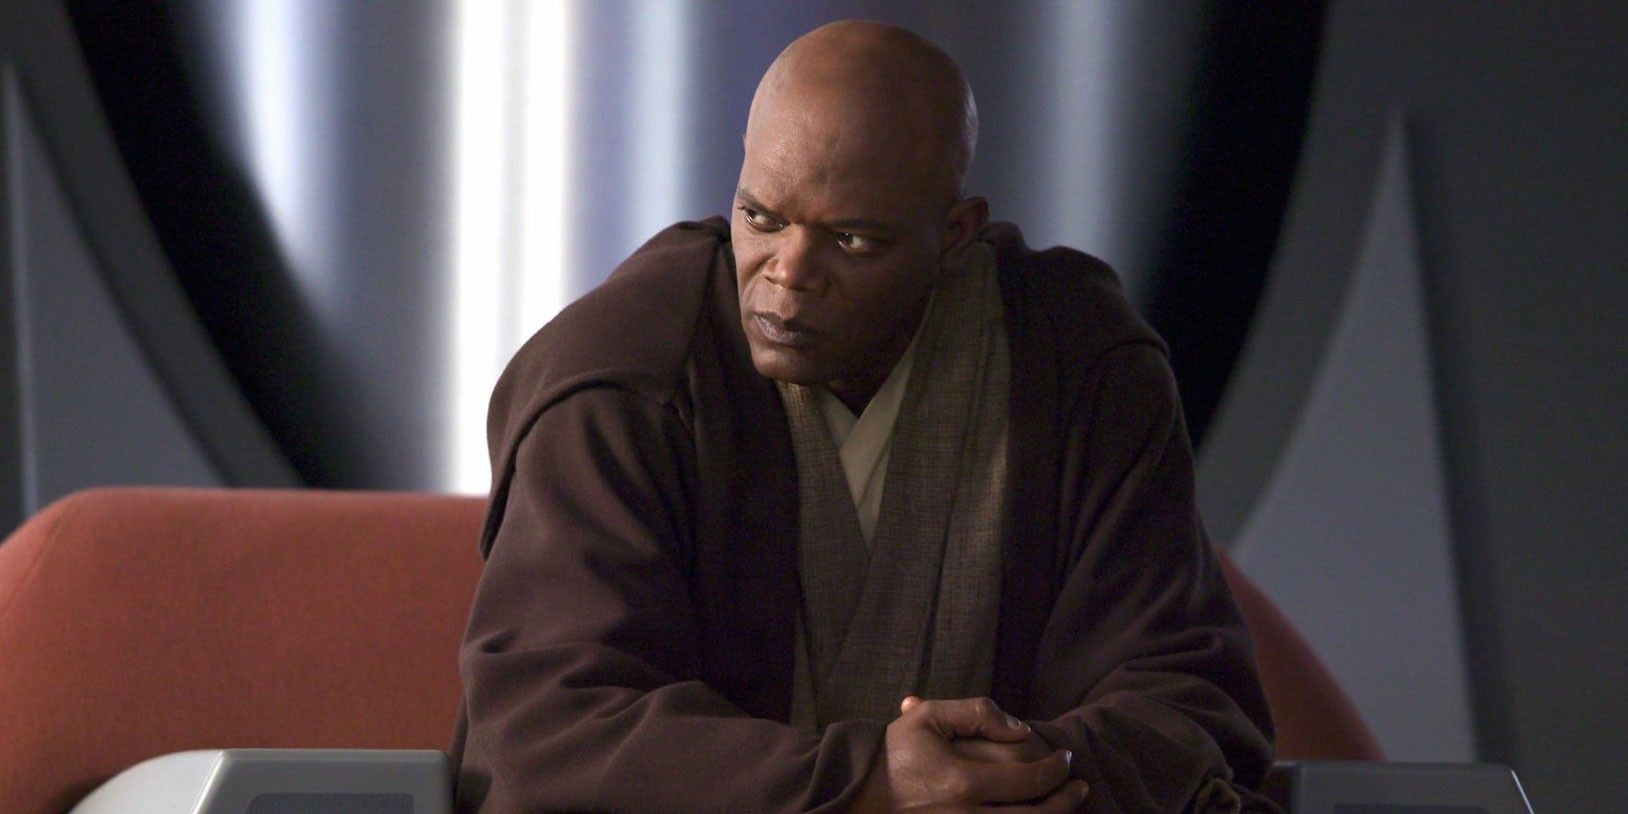 Mace Windu sitting in the Jedi Council meeting in Star Wars